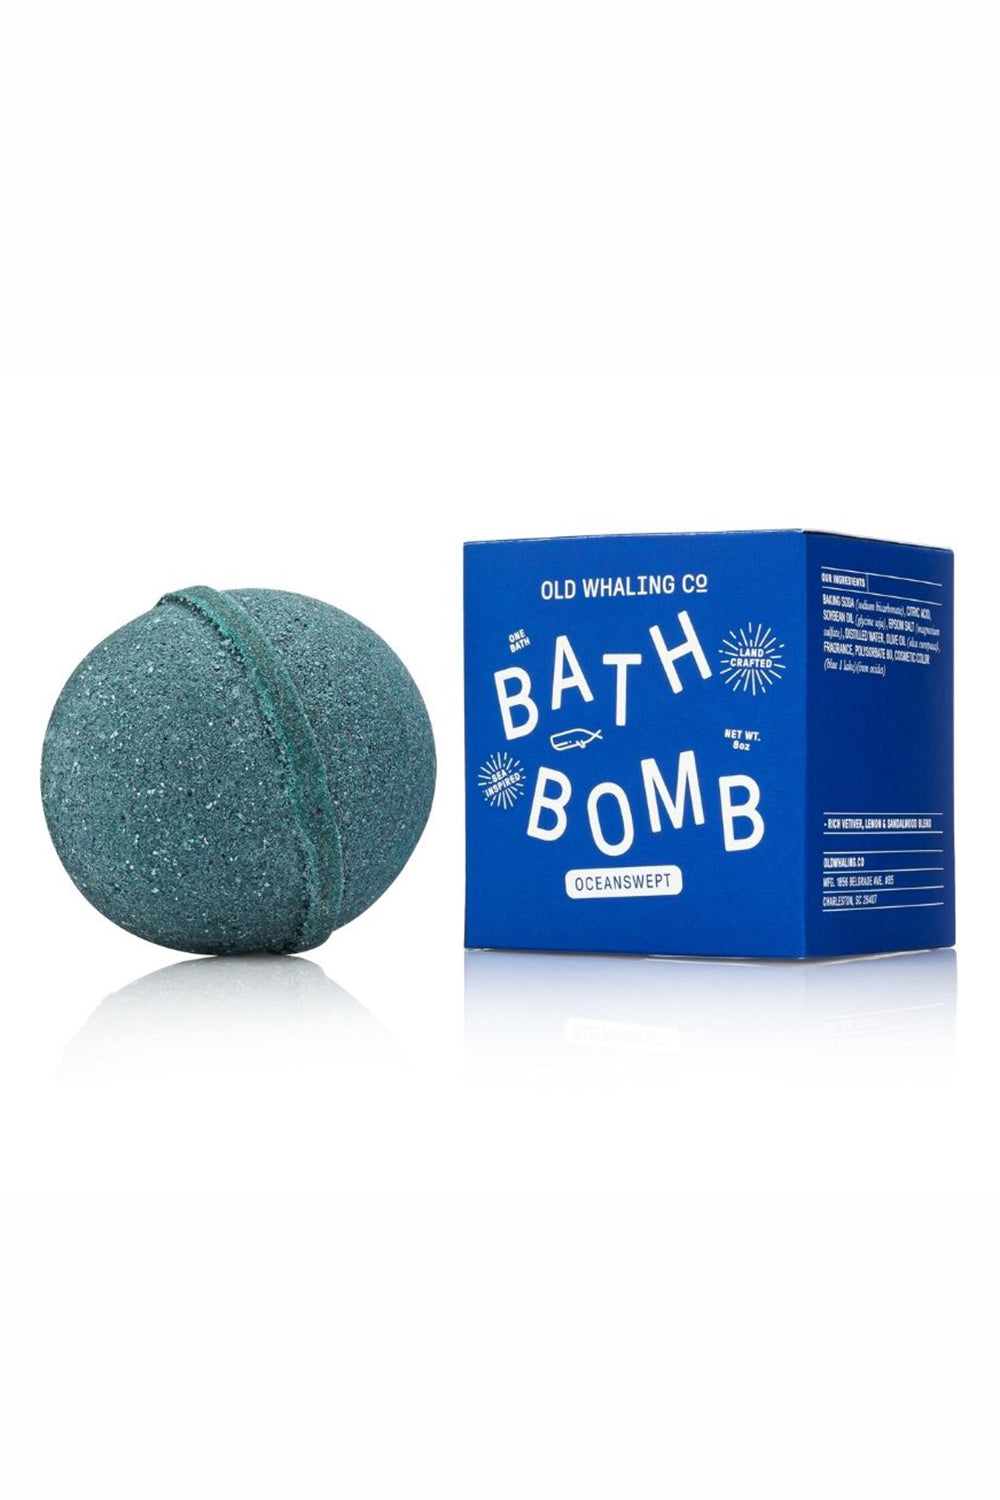 Boxed Bath Bomb - Oceanswept